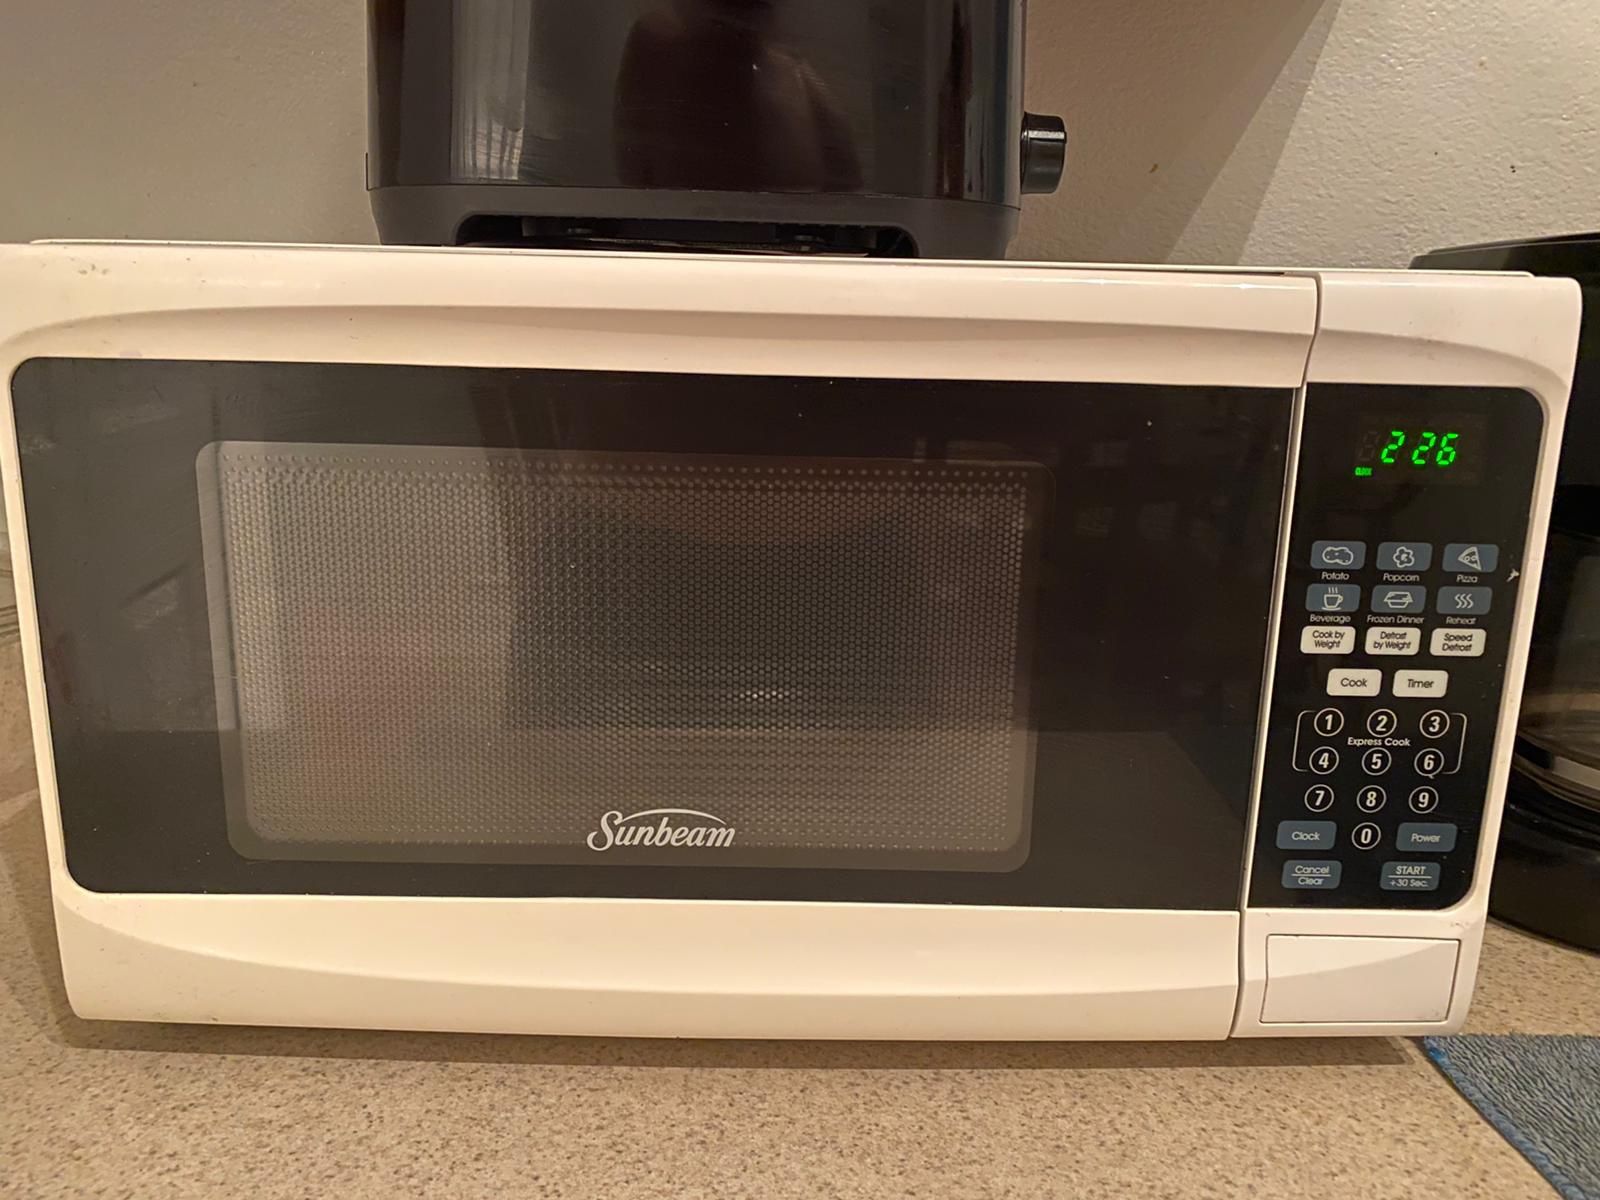 Sunbean microwave